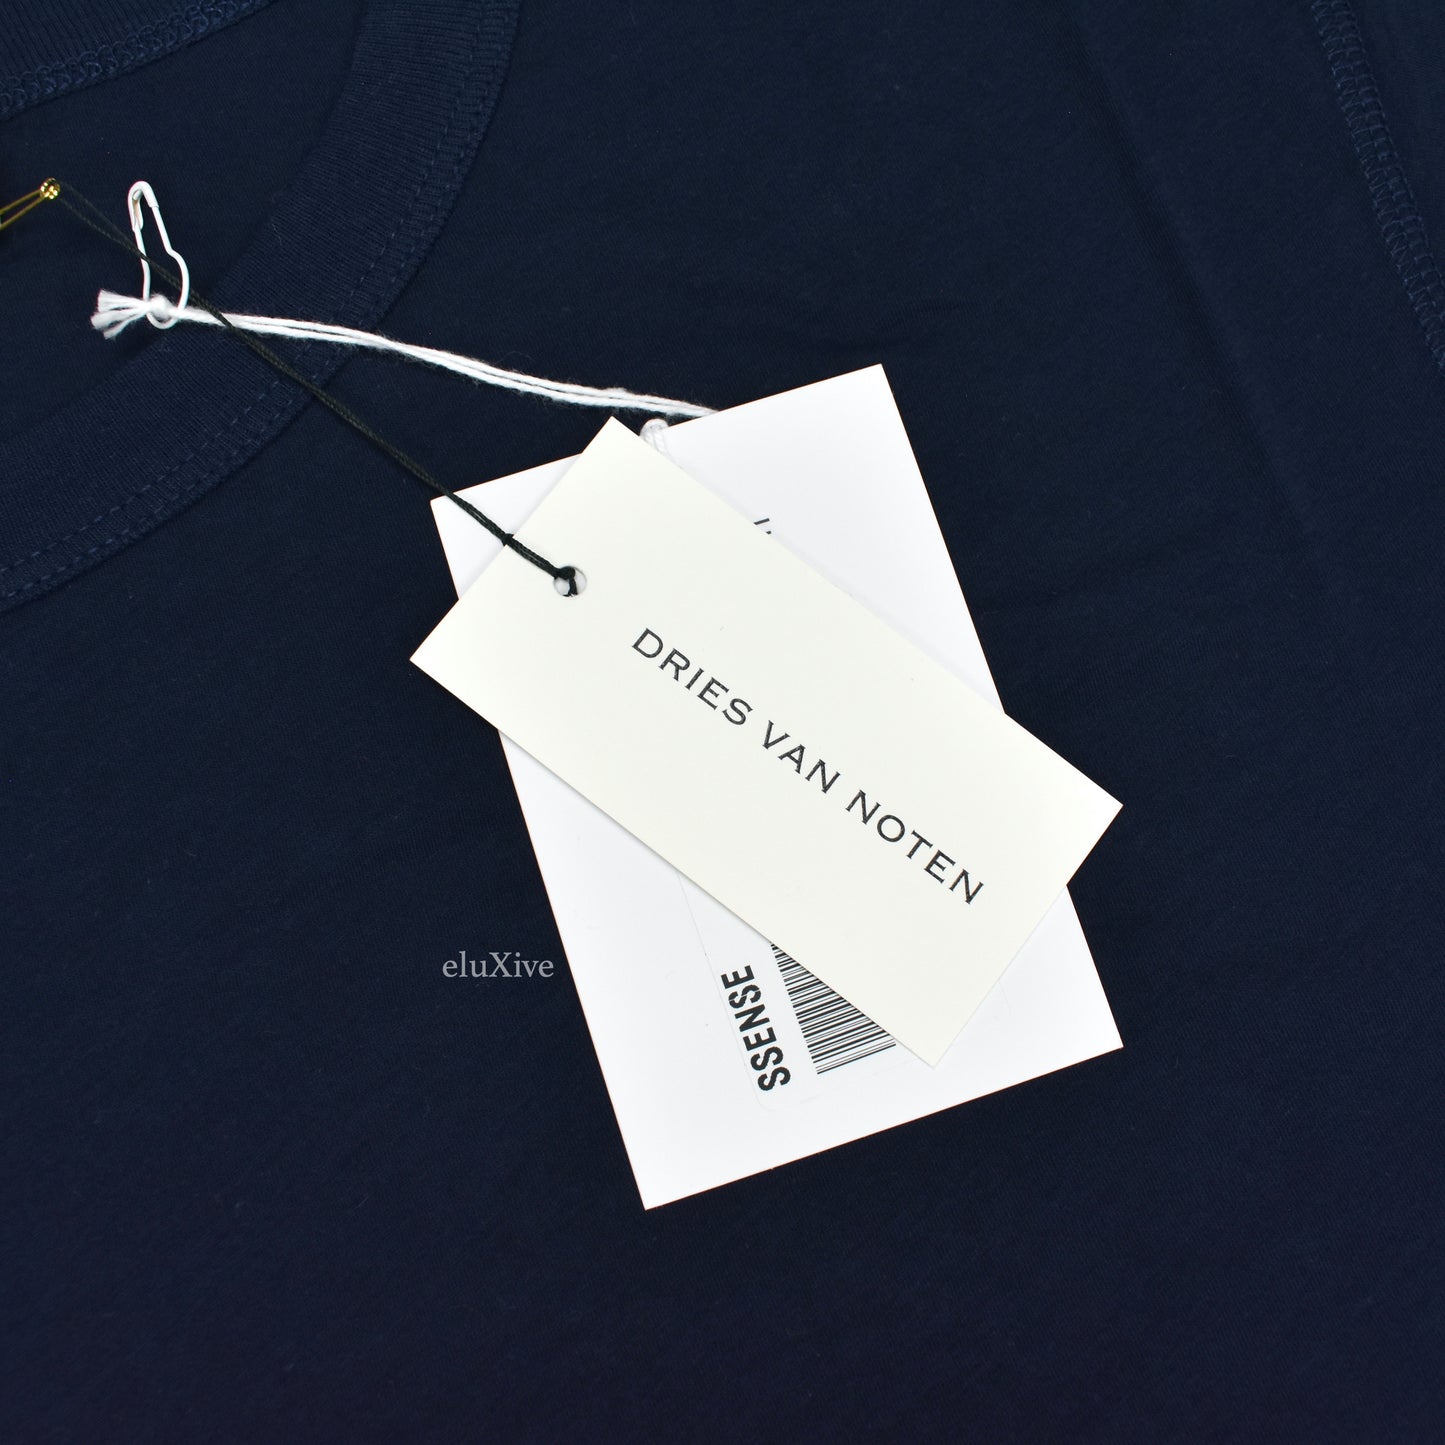 Dries Van Noten - Navy Blue Crewneck T-Shirt